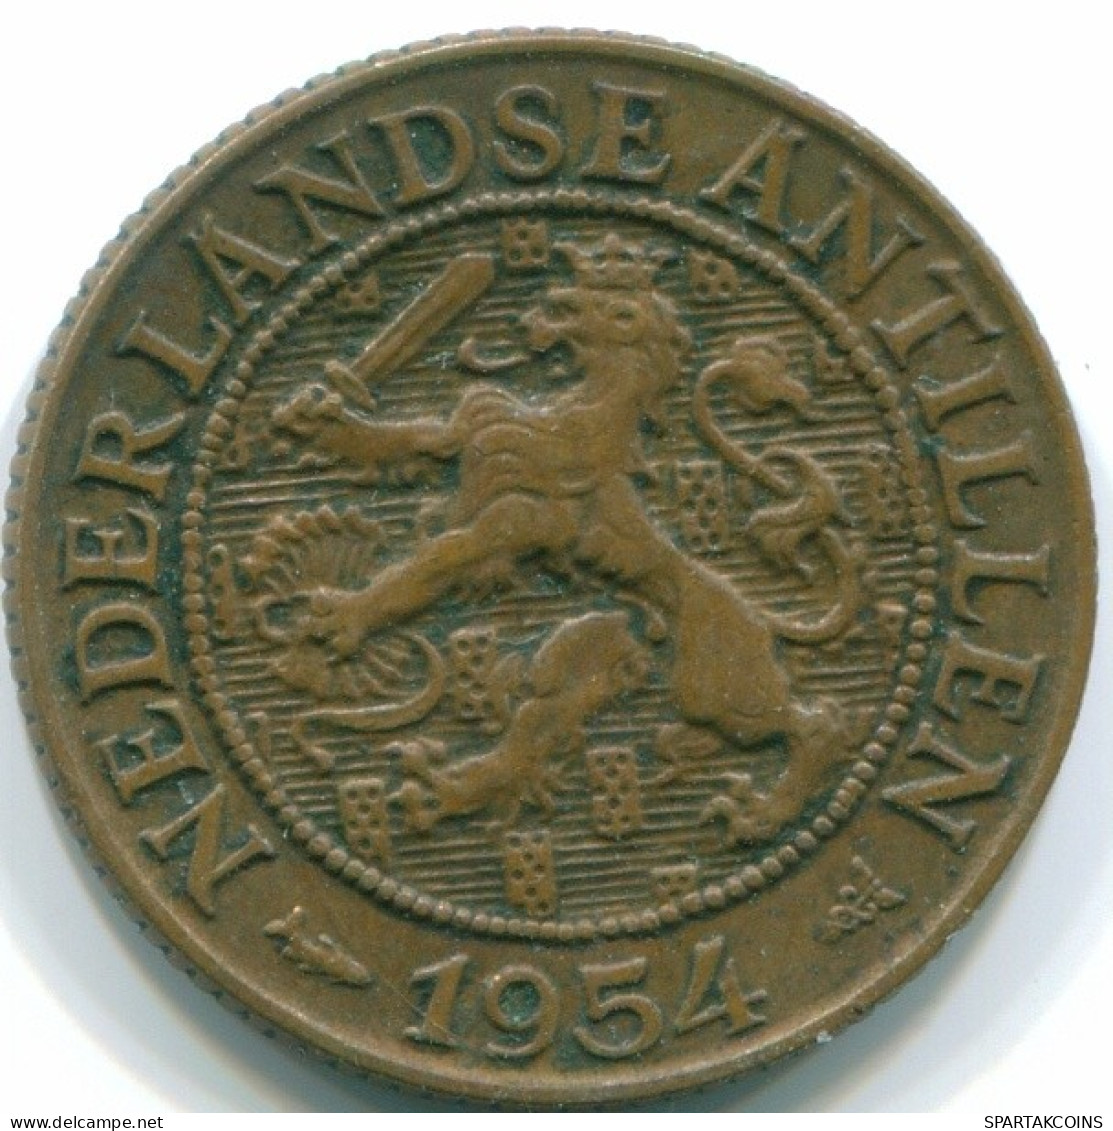 1 CENT 1954 NETHERLANDS ANTILLES Bronze Fish Colonial Coin #S11010.U.A - Antillas Neerlandesas